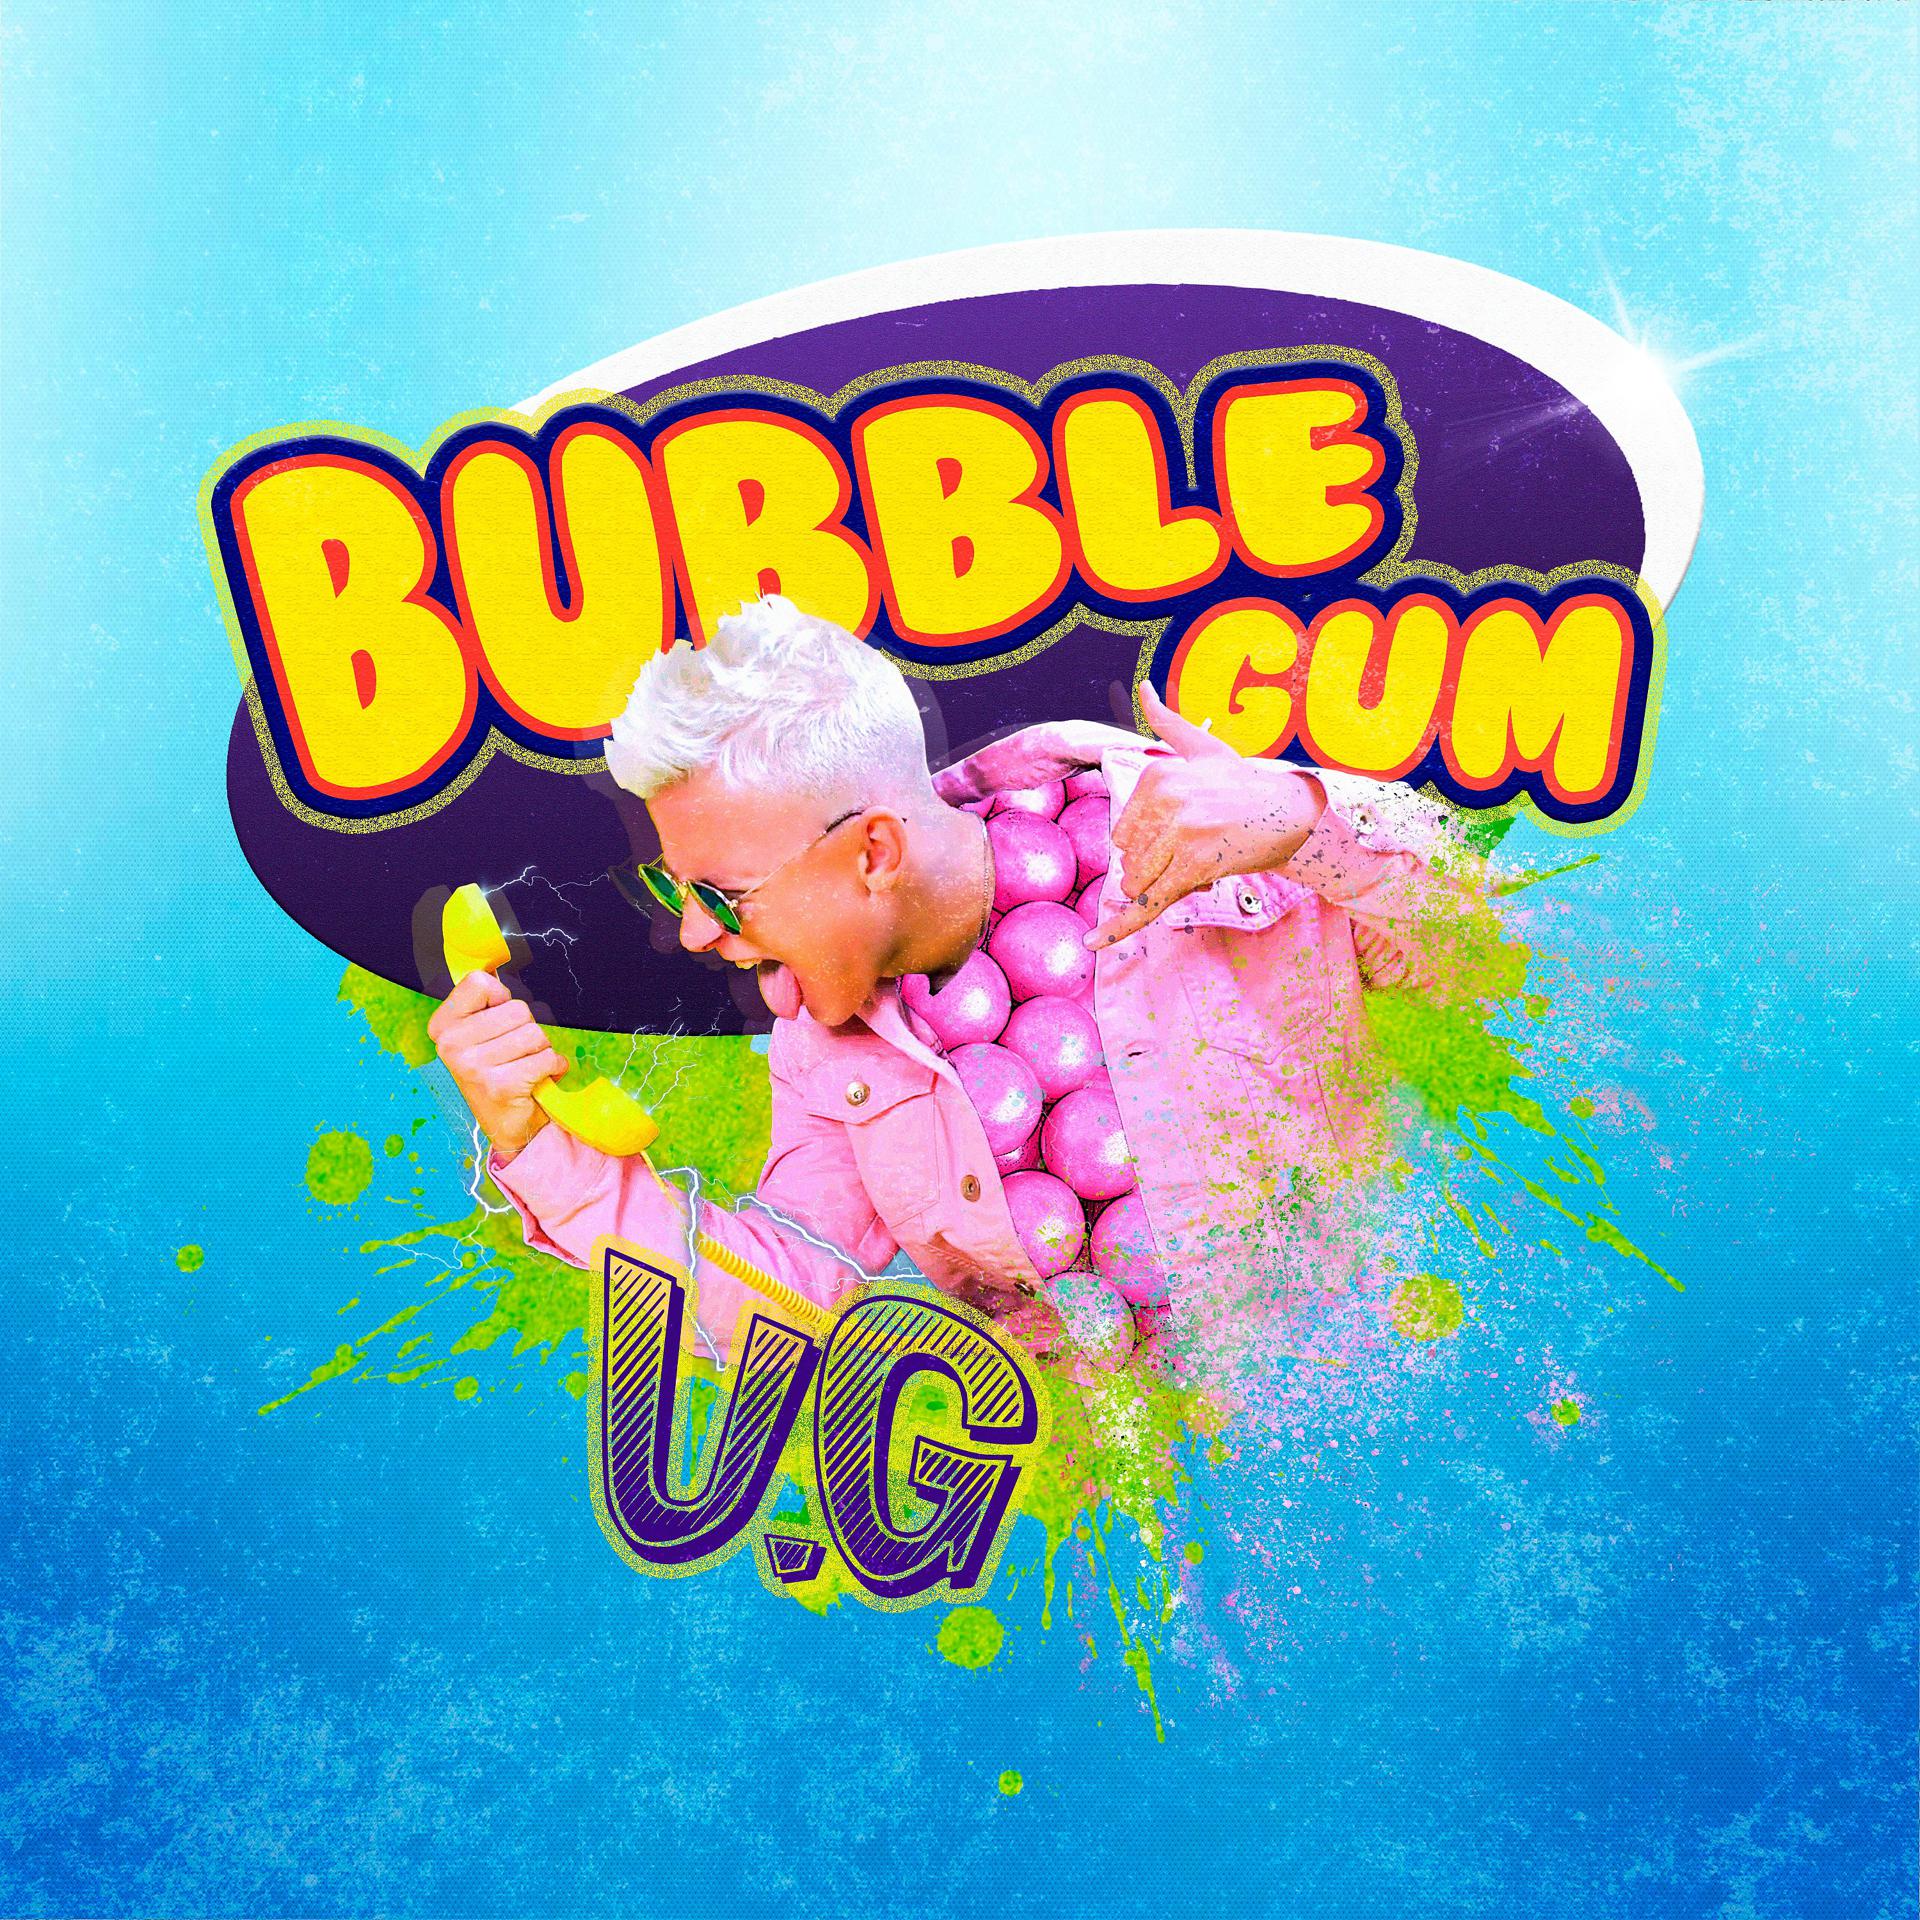 Wuzzup. G,U. G бабл. Snap91 Bubble Gum обложка.